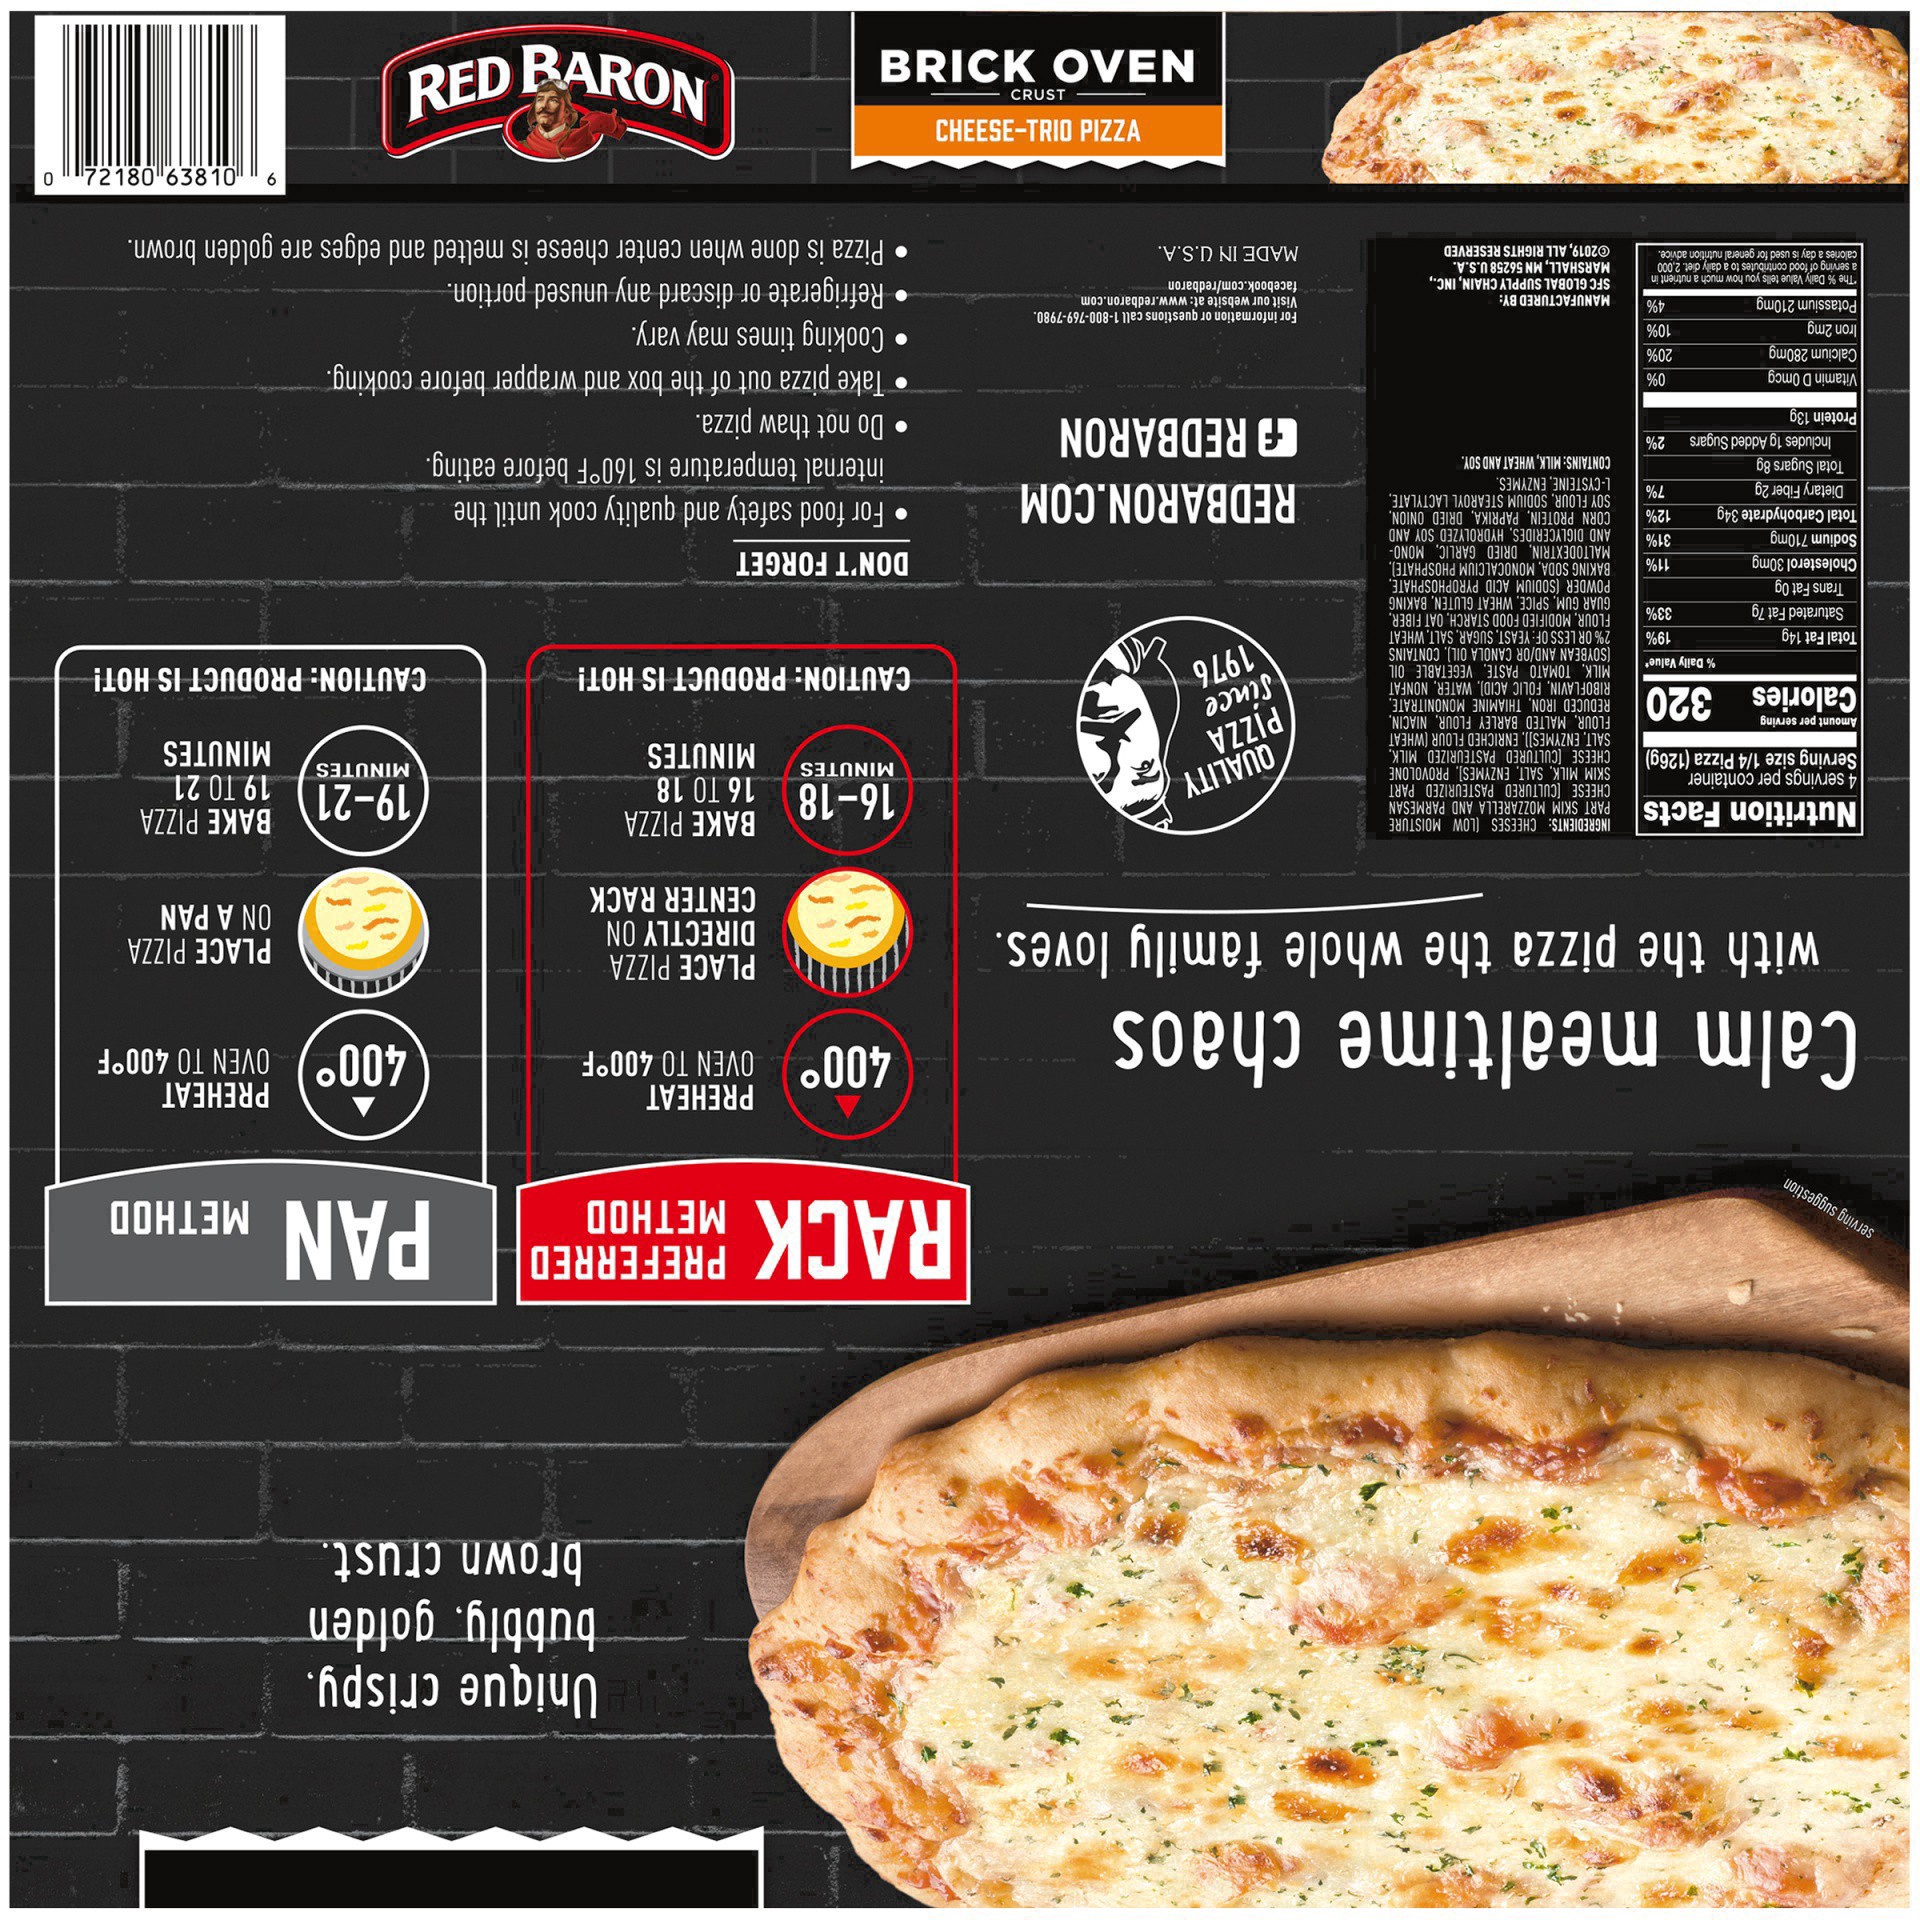 slide 50 of 66, Red Baron Brick Oven Crust Cheese-Trio Pizza 17.82 oz, 17.82 oz